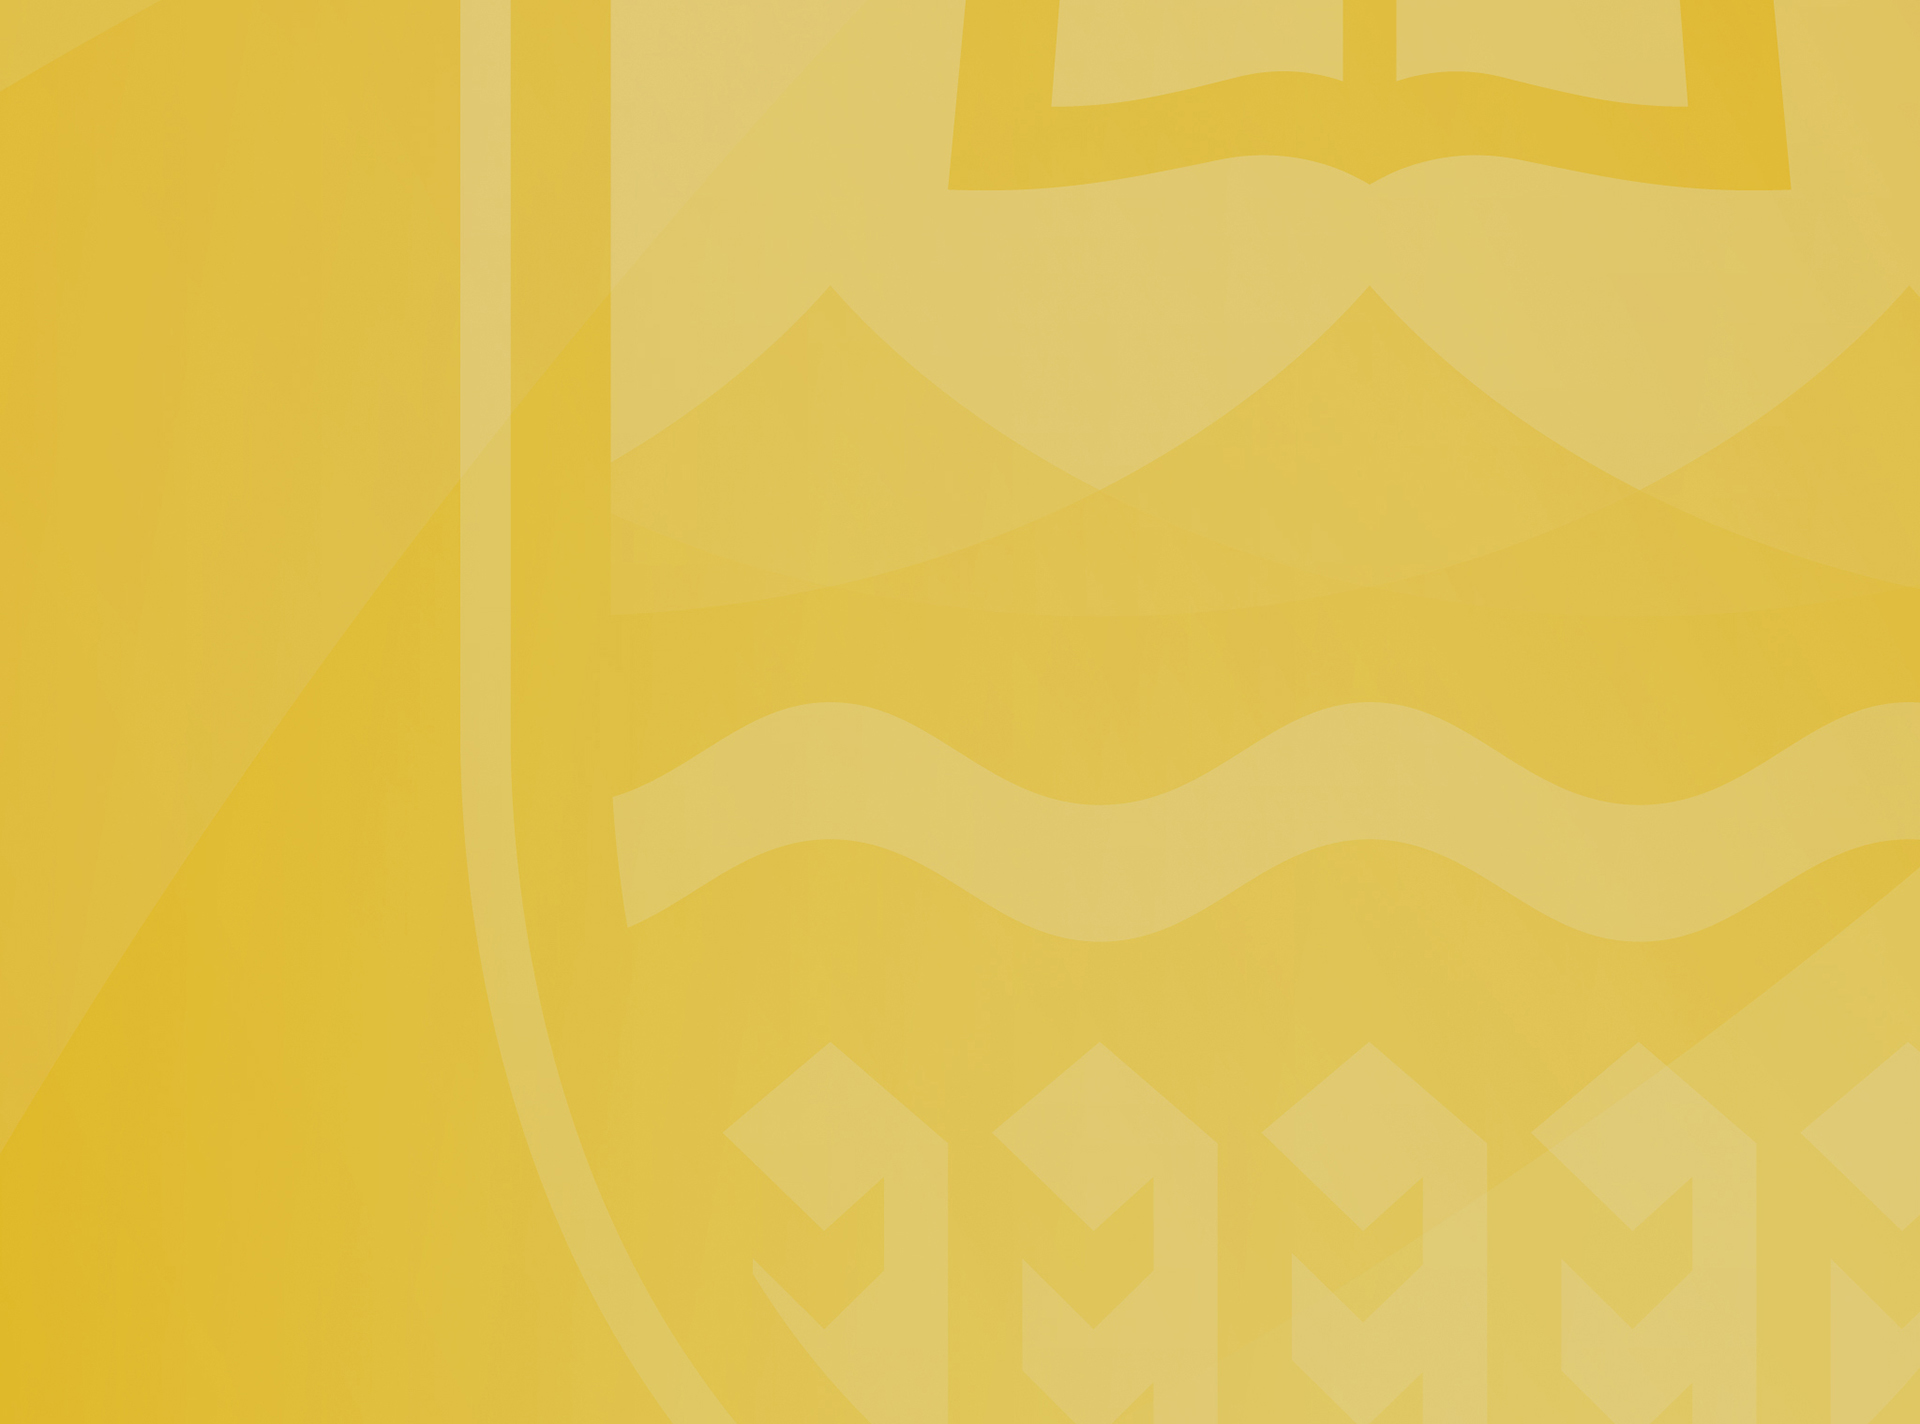 UAlberta shield in yellow background